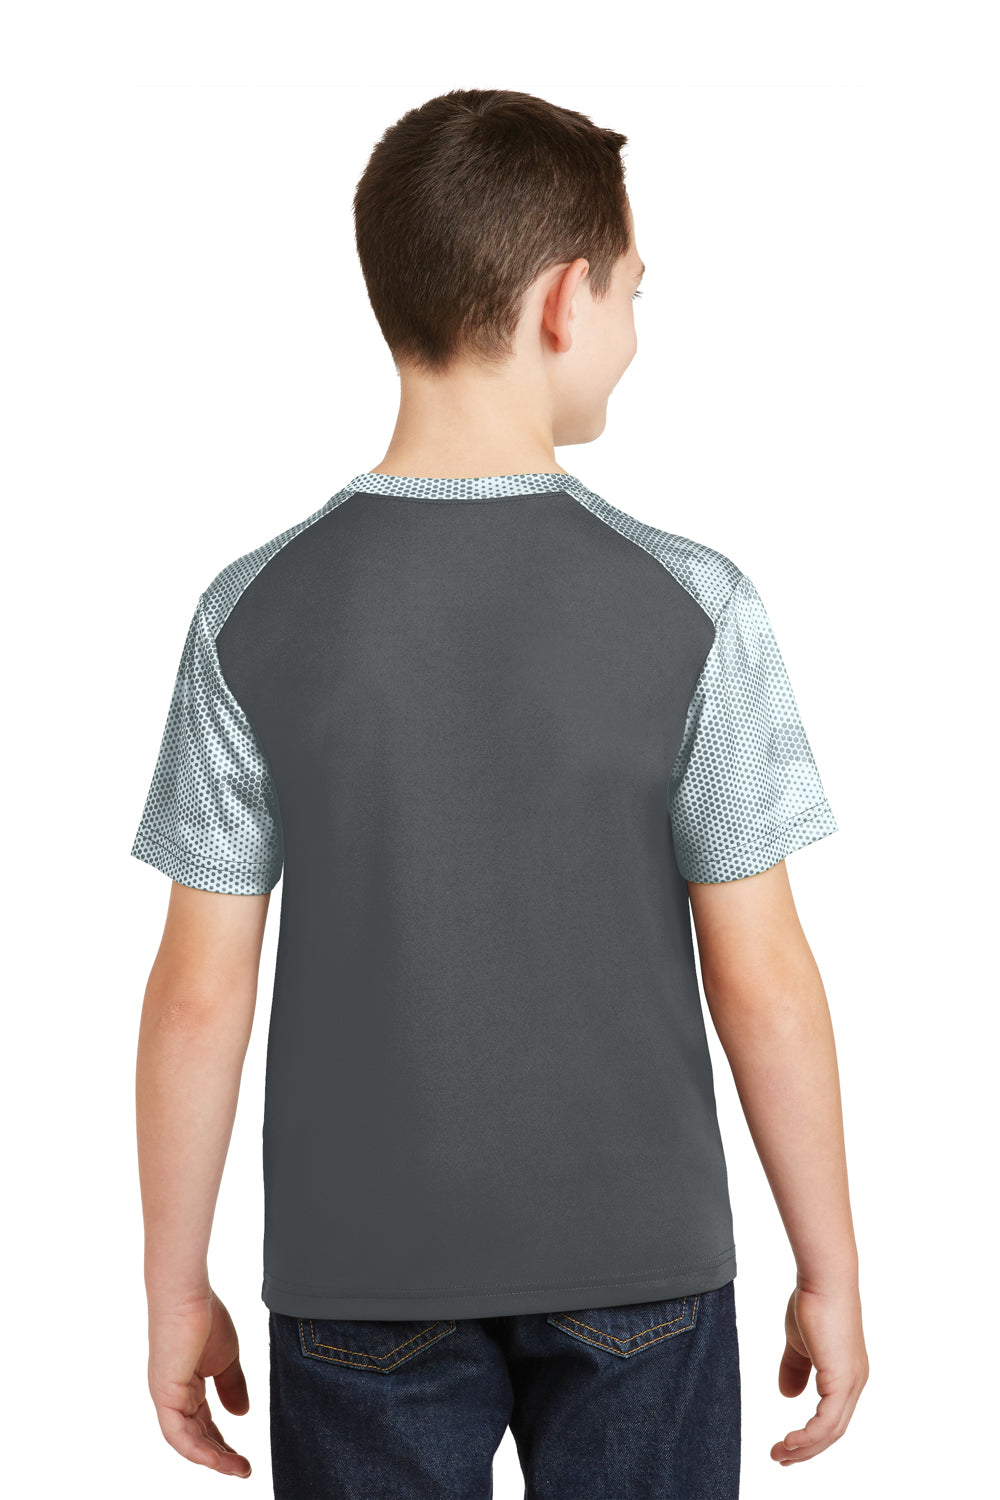 Sport-Tek YST371 Youth CamoHex Moisture Wicking Short Sleeve Crewneck T-Shirt Iron Grey/White Back